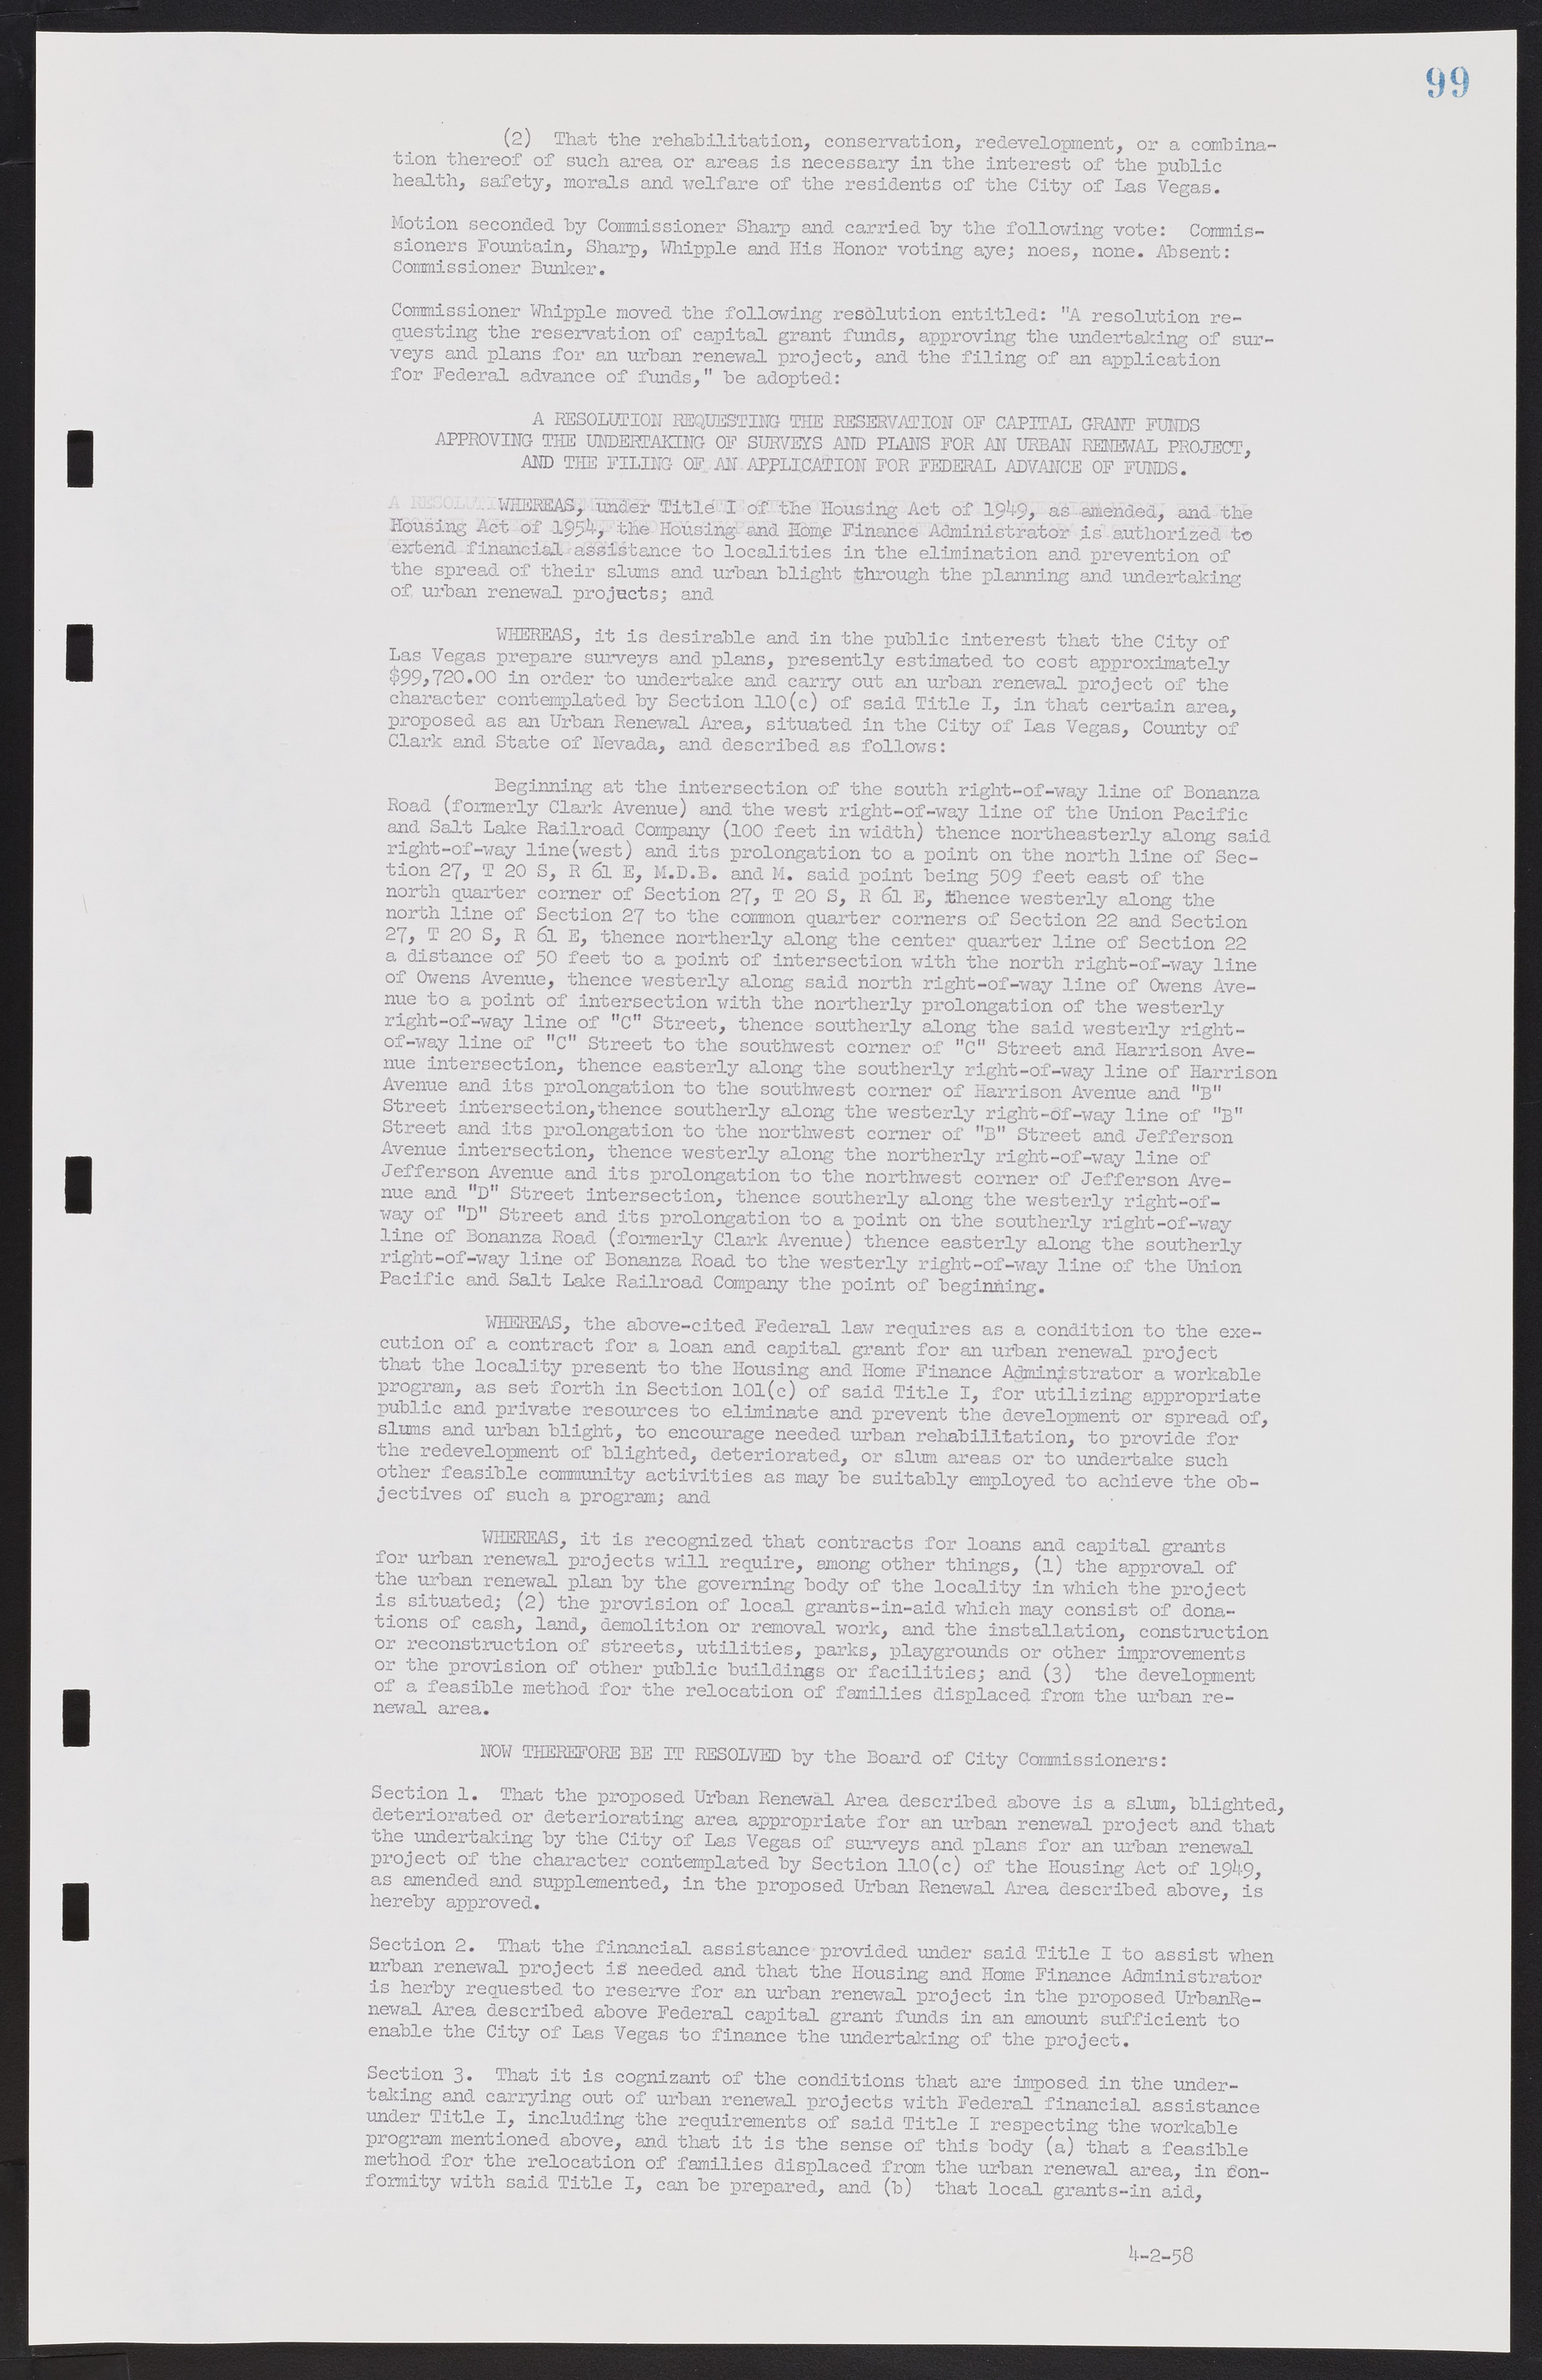 Las Vegas City Commission Minutes, November 20, 1957 to December 2, 1959, lvc000011-103